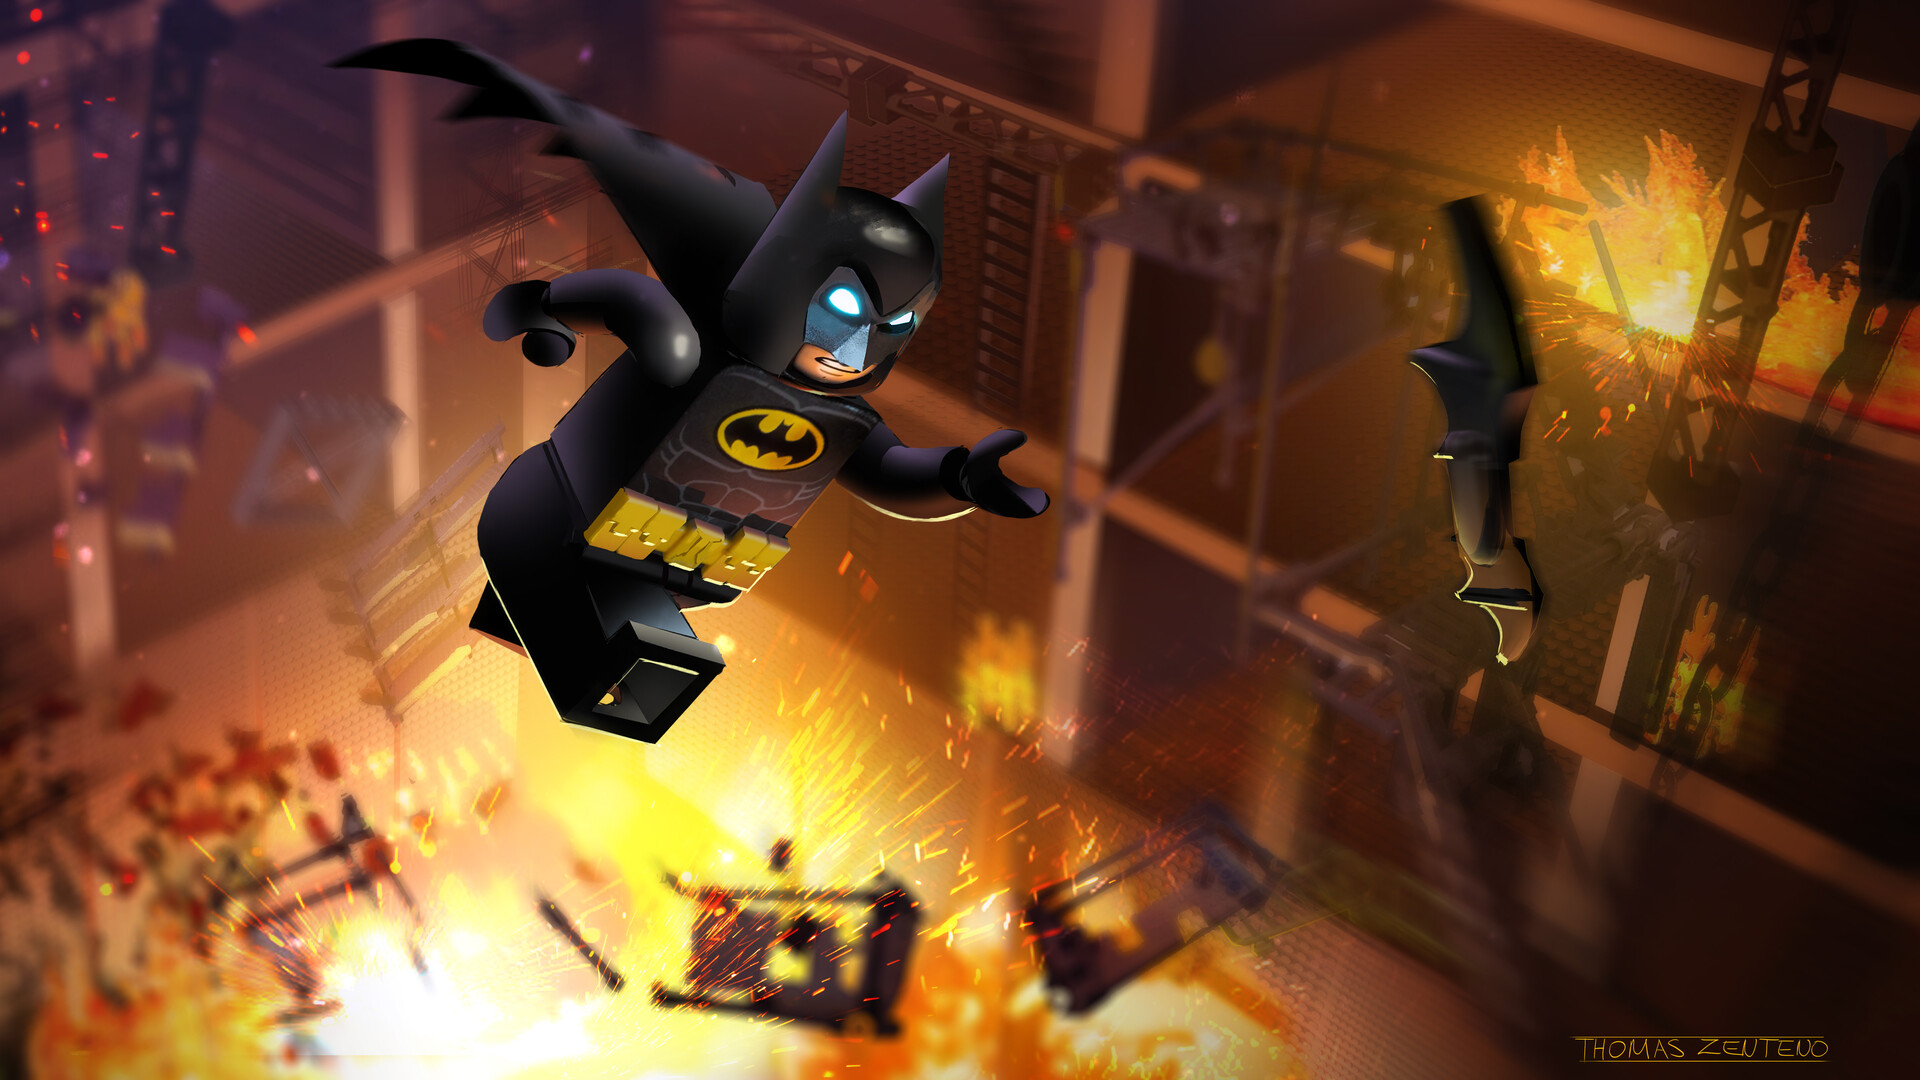 Thomas Zenteno - The LEGO Batman Movie: Color Script